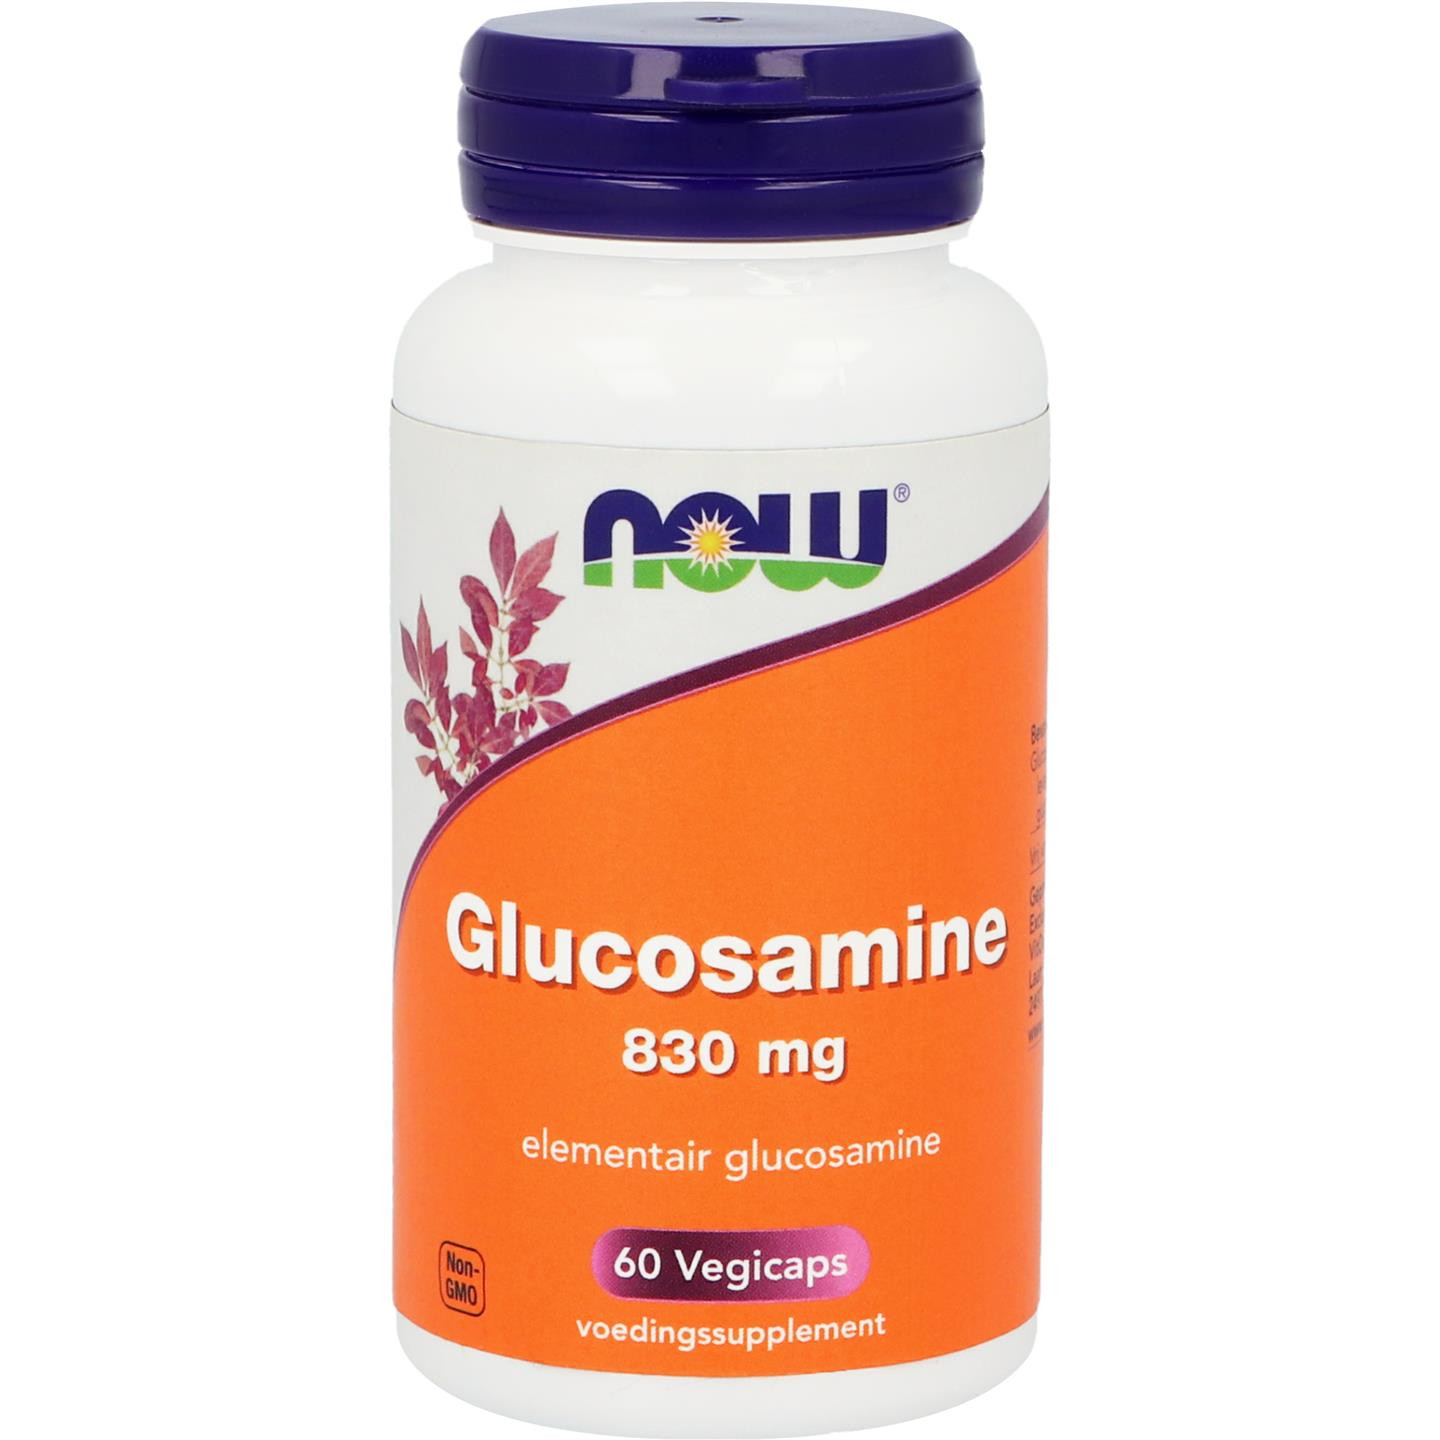 Glucosamine 830 mg